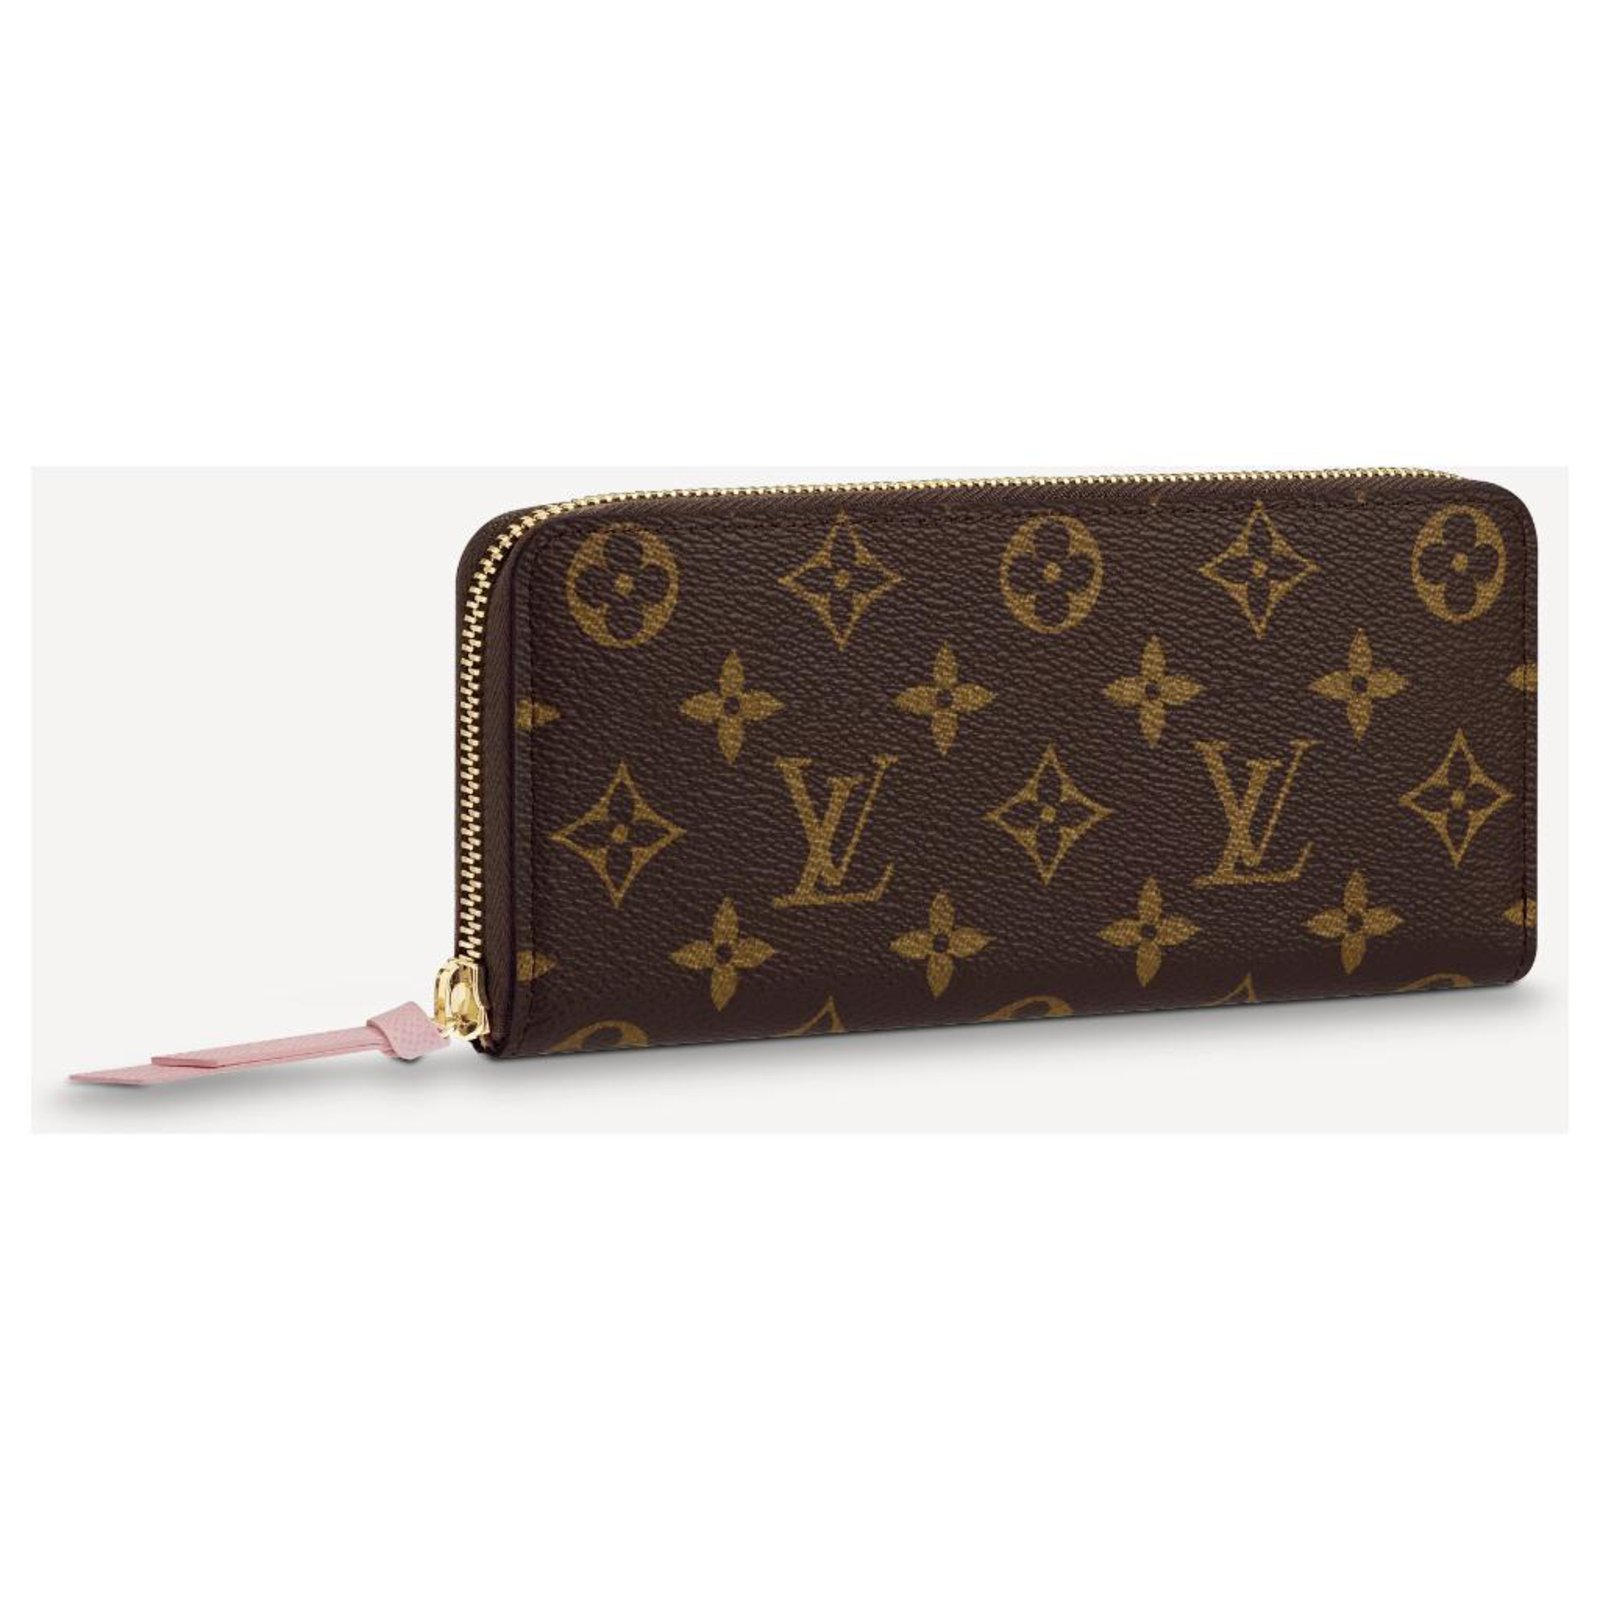 Billetera Juliette con monograma inverso de Louis Vuitton